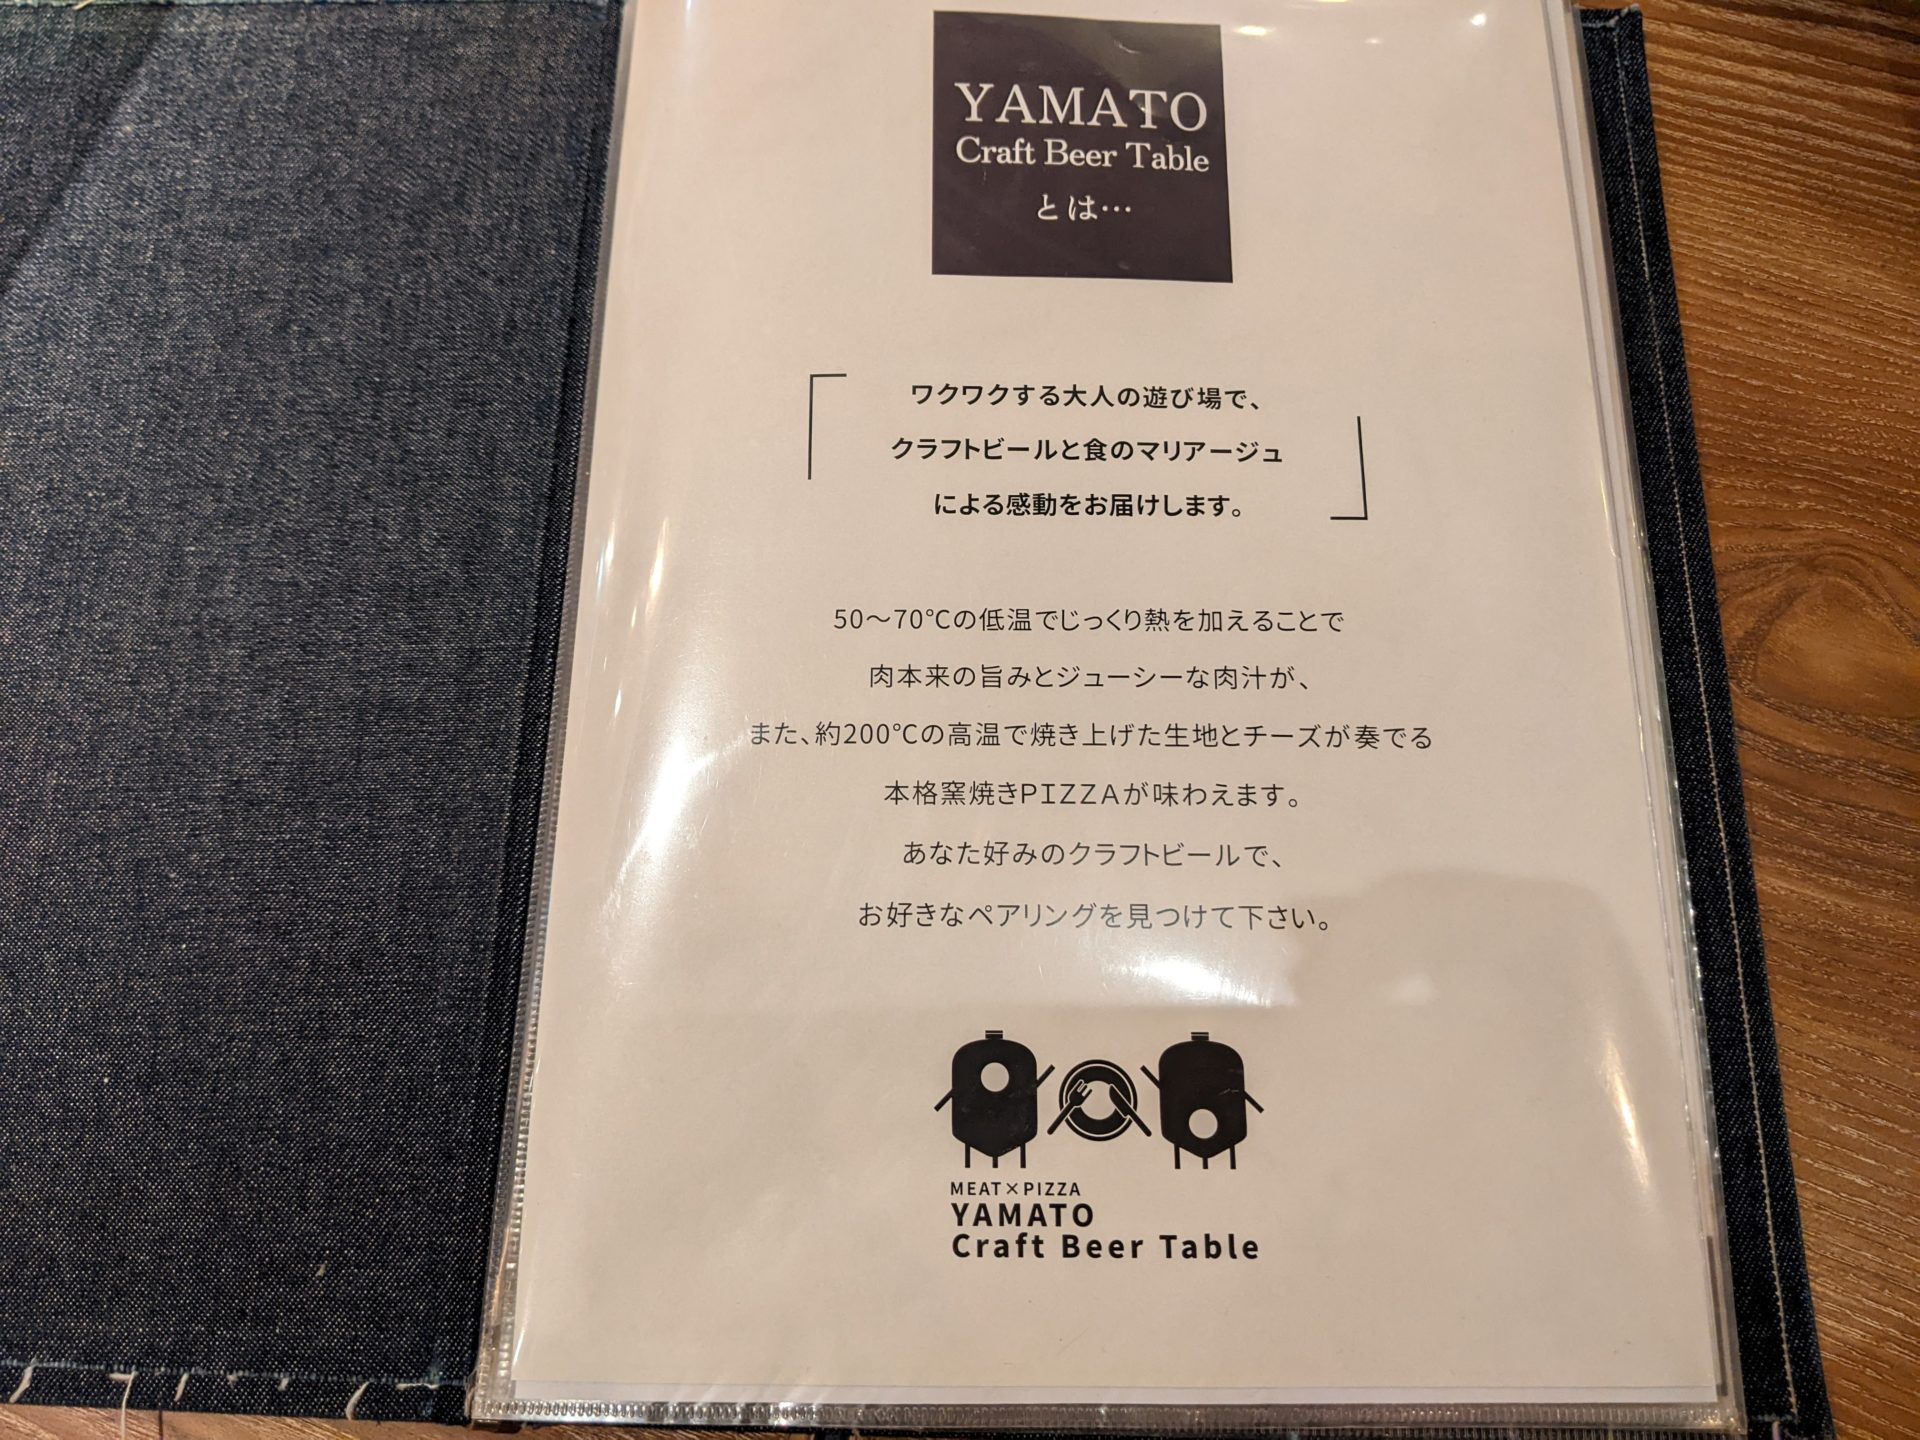 YAMATO Craft Beer